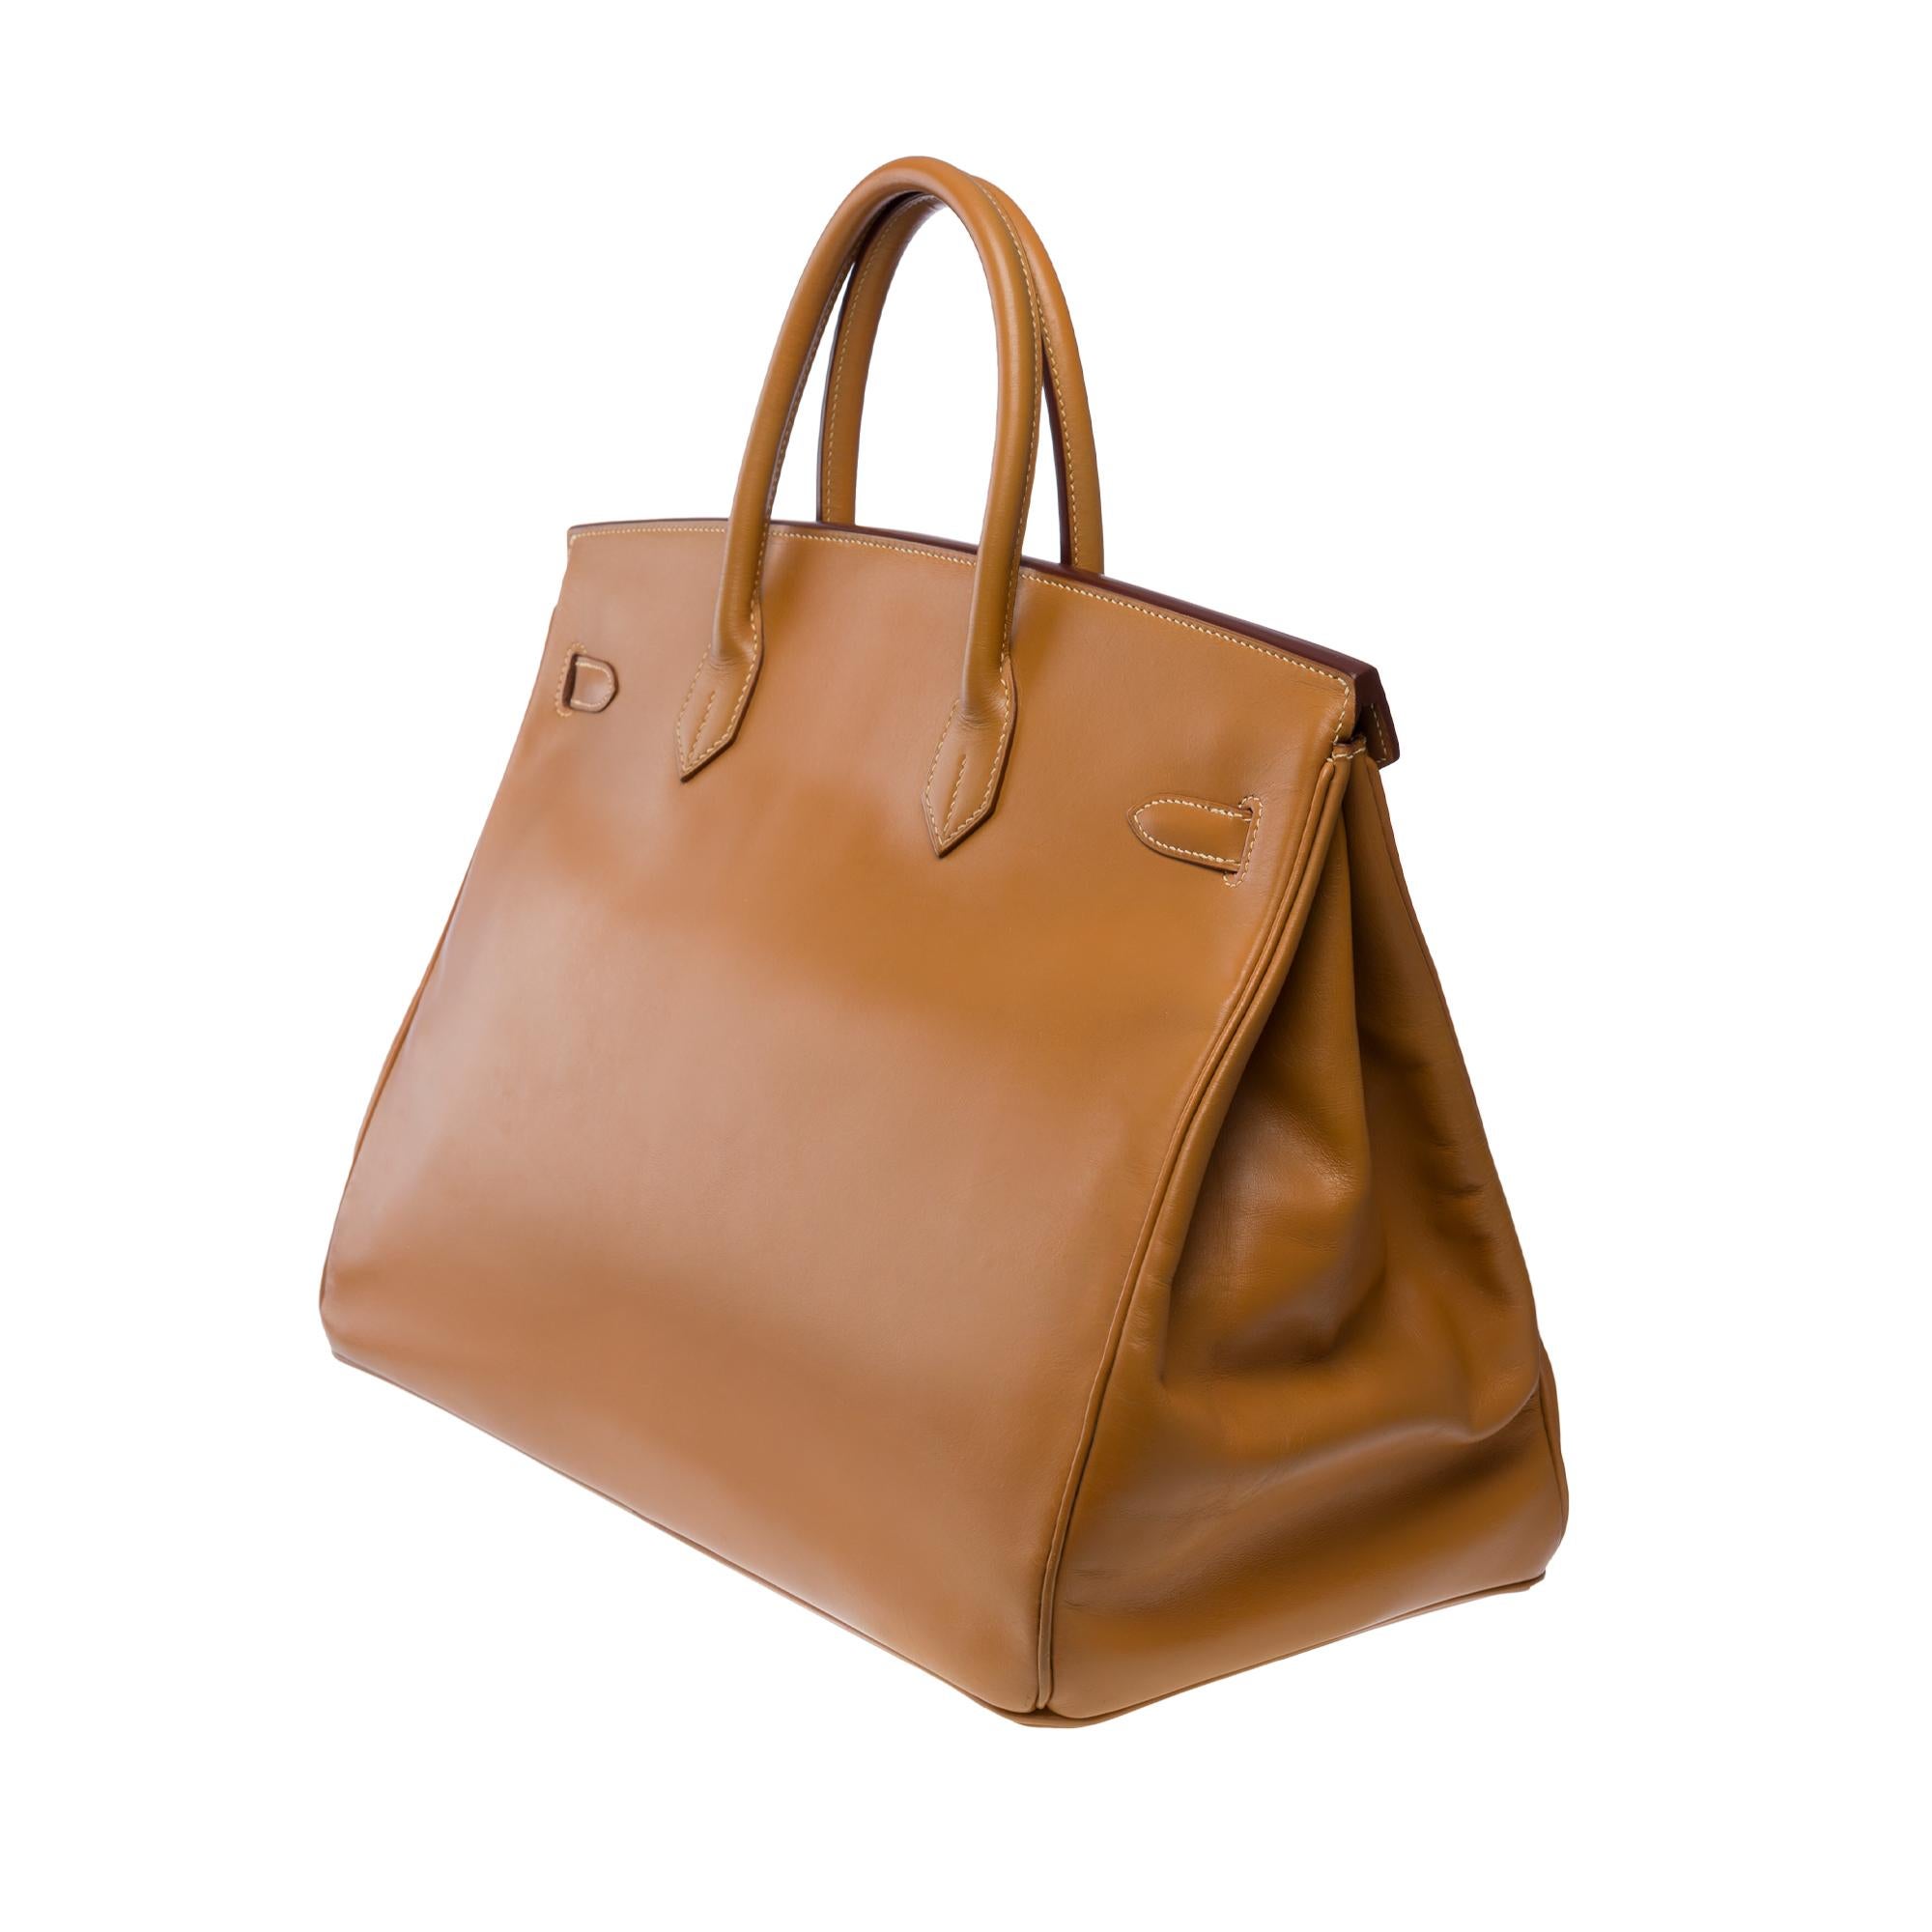 Fantastique sac à main Hermes Birkin 40 en cuir Chamonix Camel (Gold), GHW Unisexe en vente